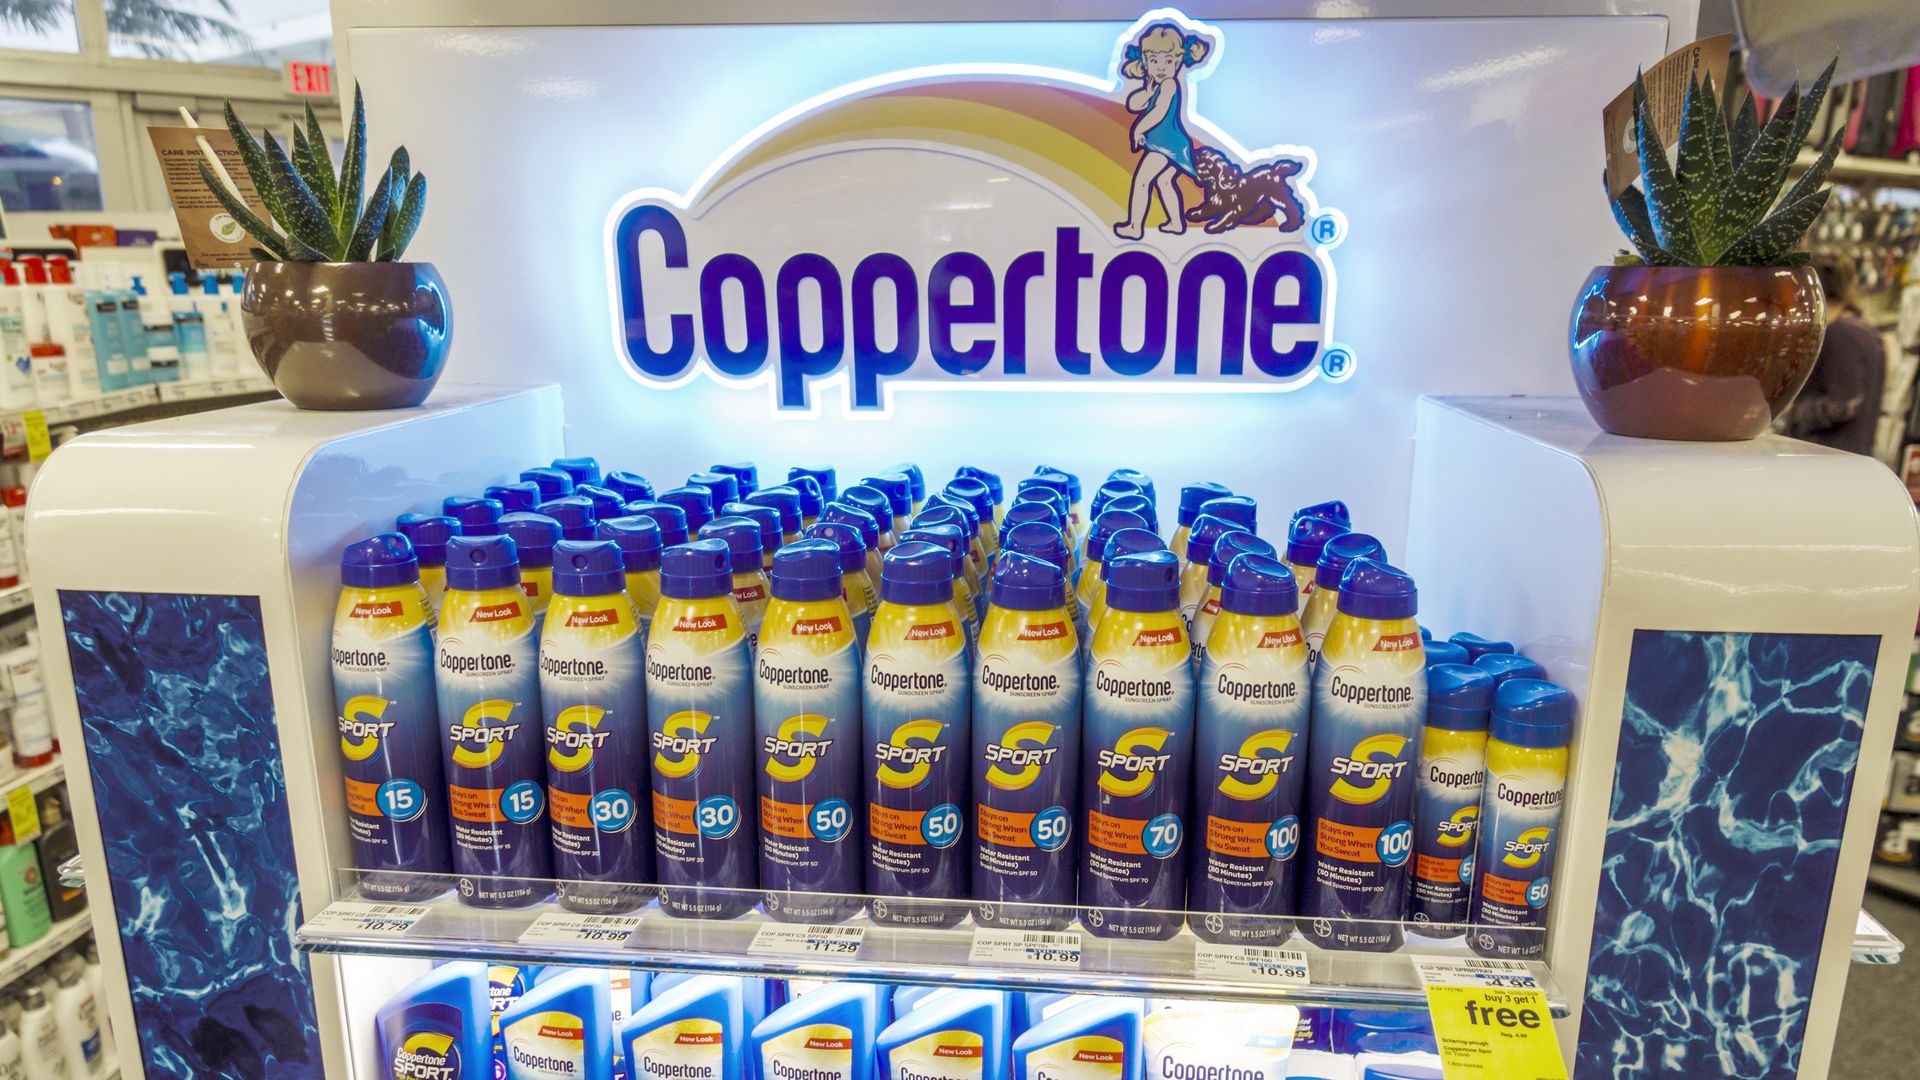 Coppertone sunscreen display.